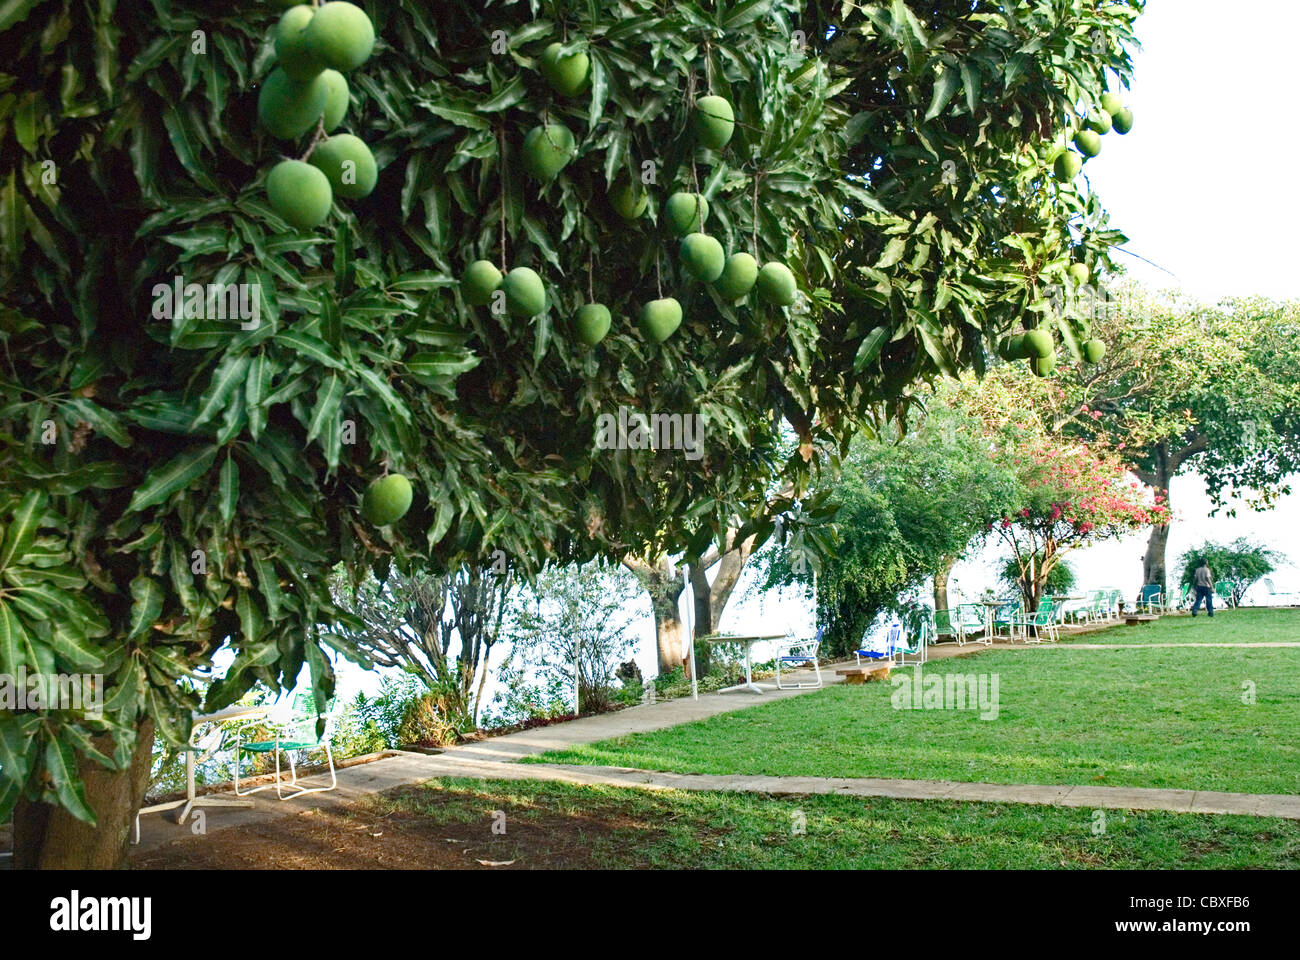 Mango tree in fruit Stock Photo - Alamy